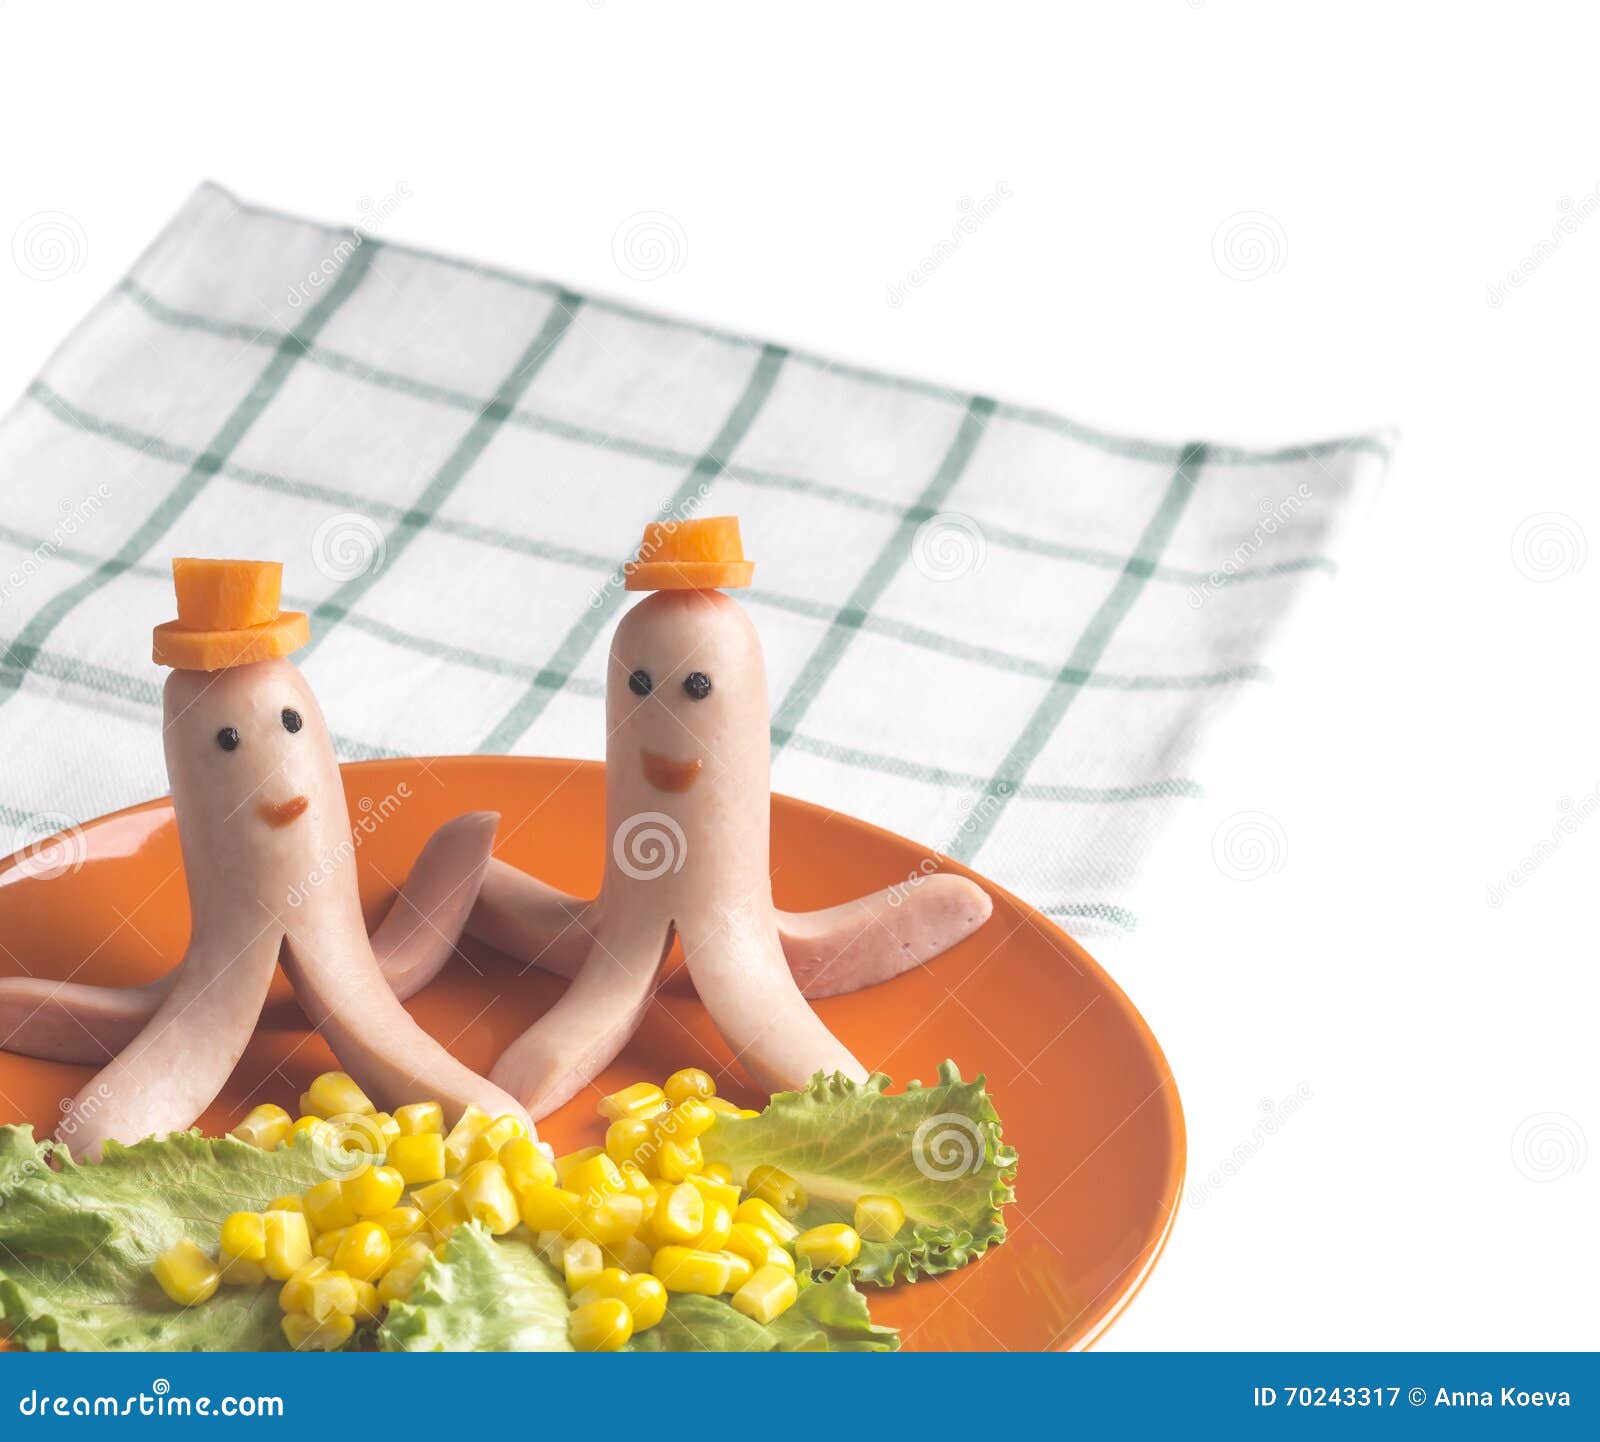 sausages-shape-octopus-hats-carrot-orange-plate-salad-corn-funny-octopuses-edible-70243317.jpg